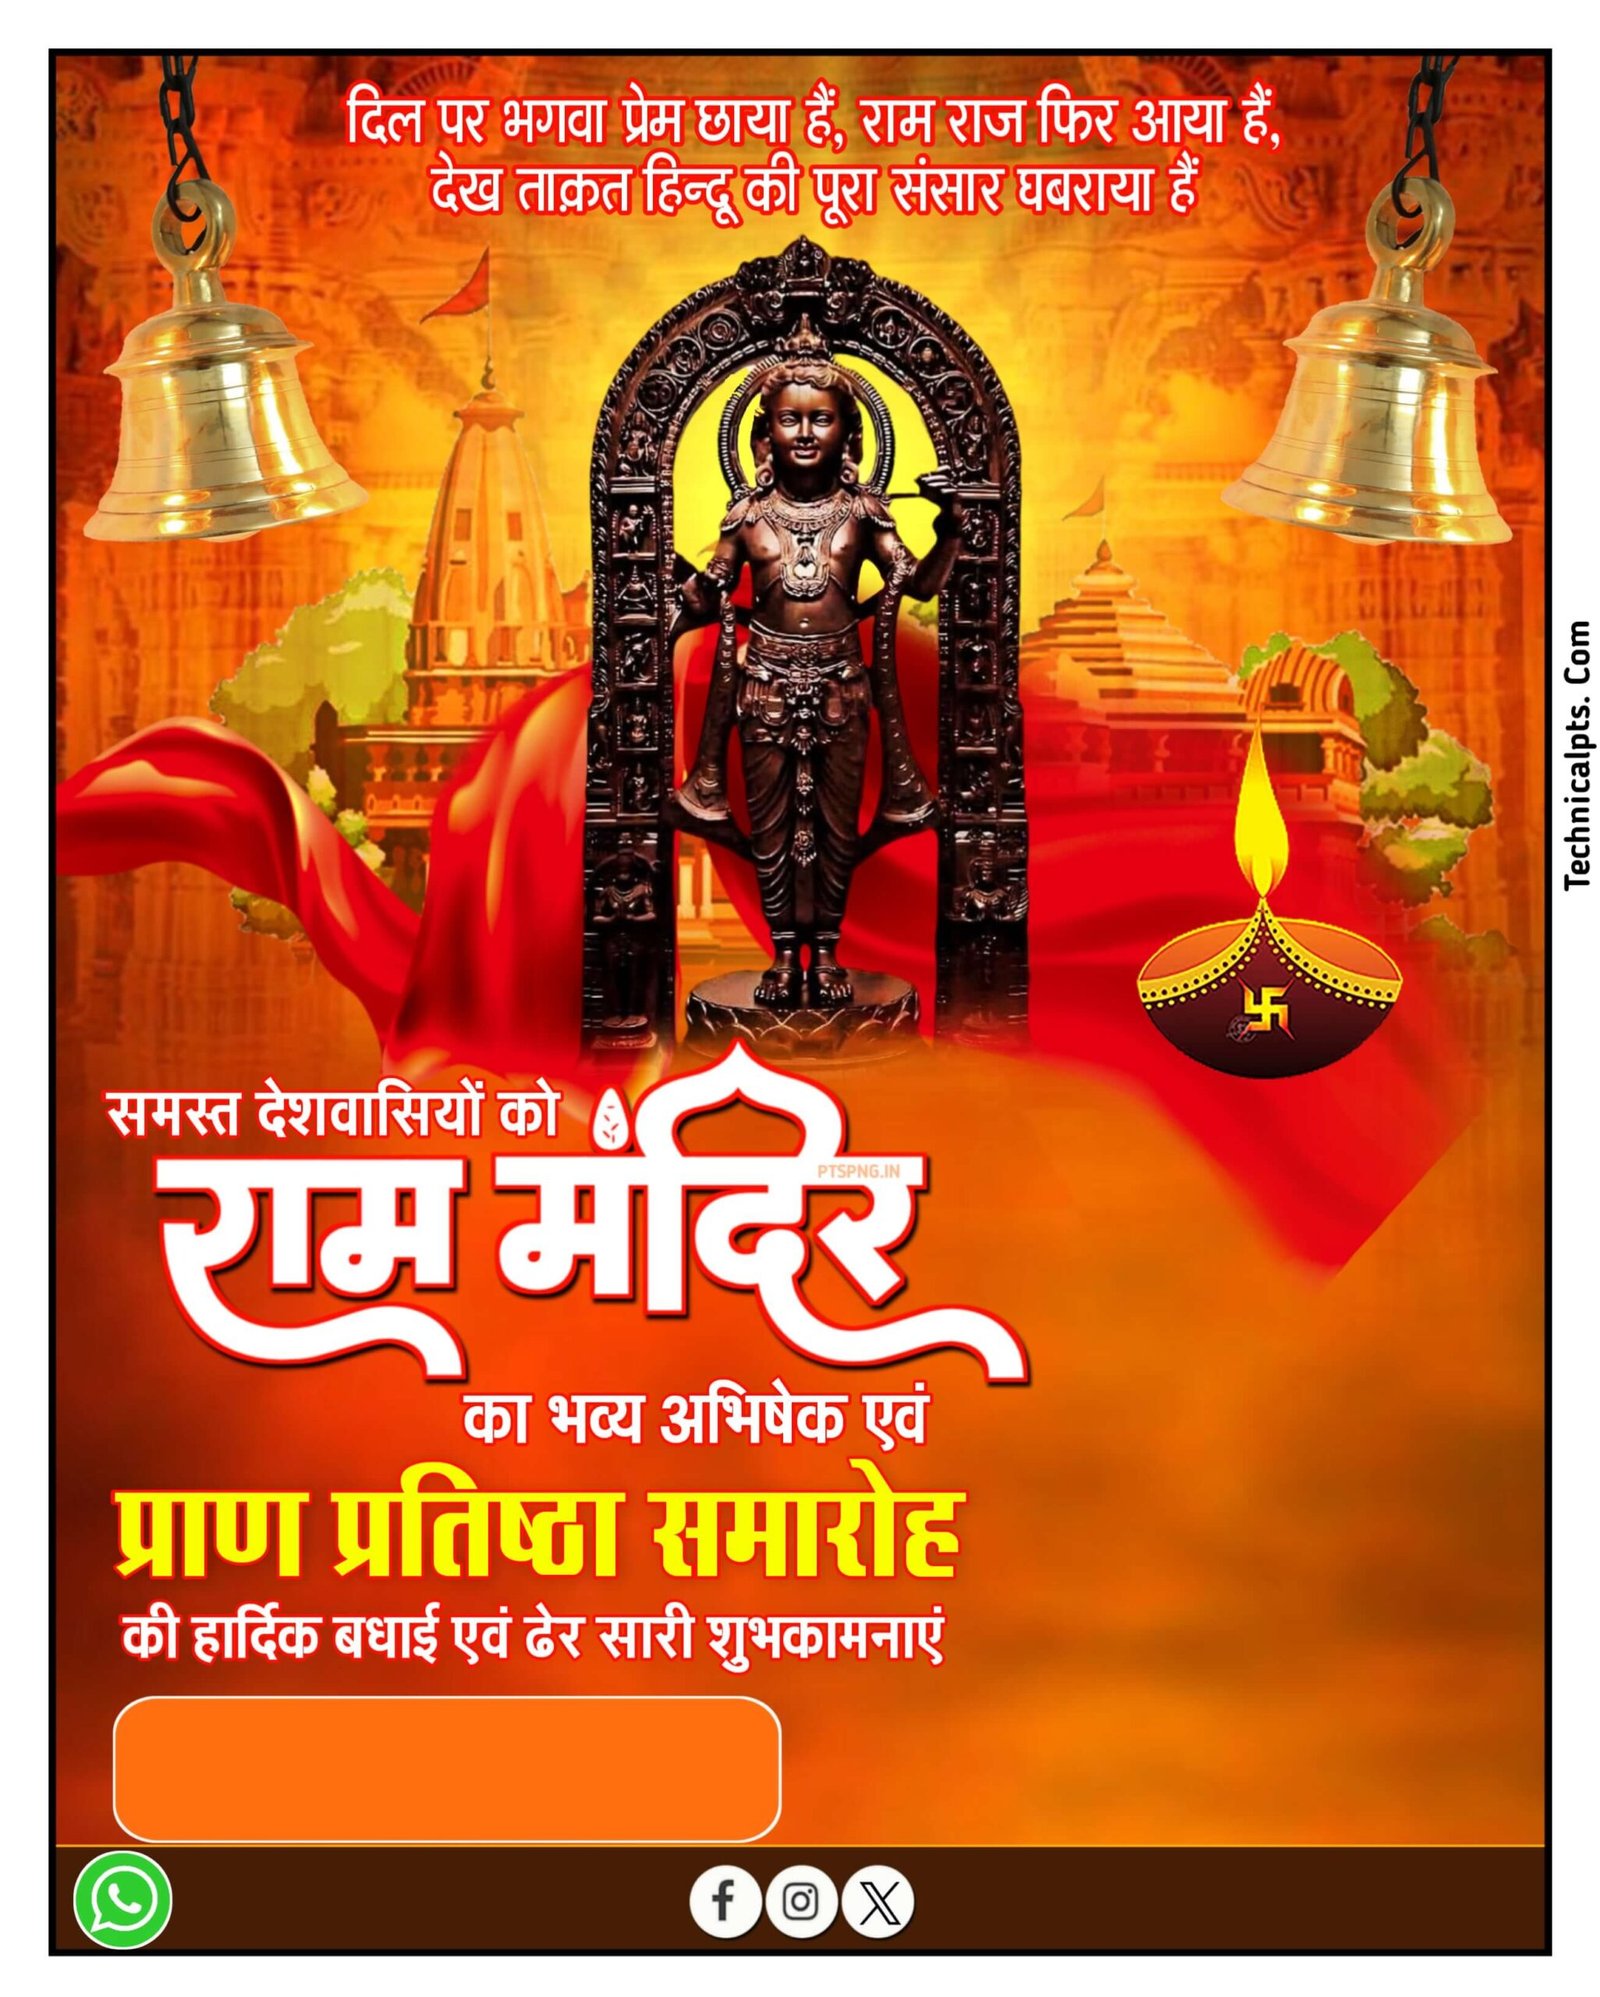 Ram Mandir ka poster Kaise bane mobile se| 22 January Ram Mandir poster PNG background download